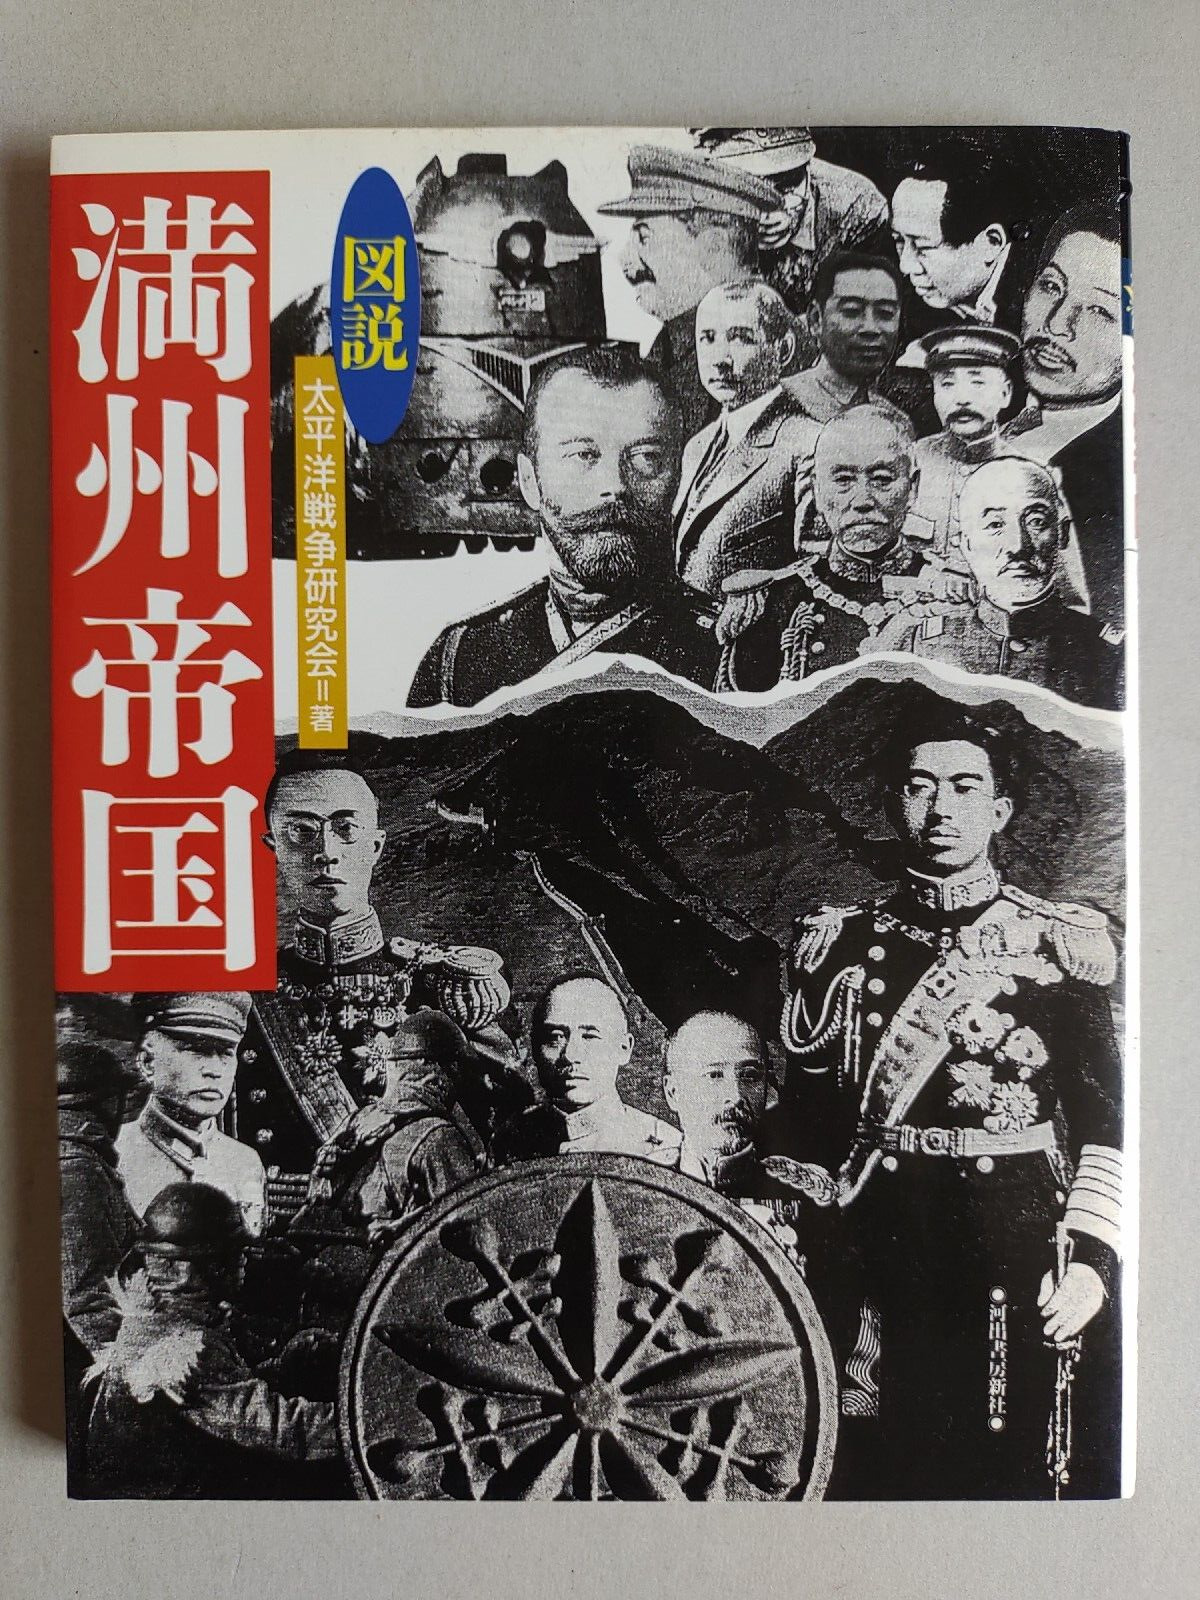 MANCHUKUO BOOK SOUTH MANCHURIA RAILWAY EMPEROR PU YI CHINA SINO-JAPANESE WAR 96'